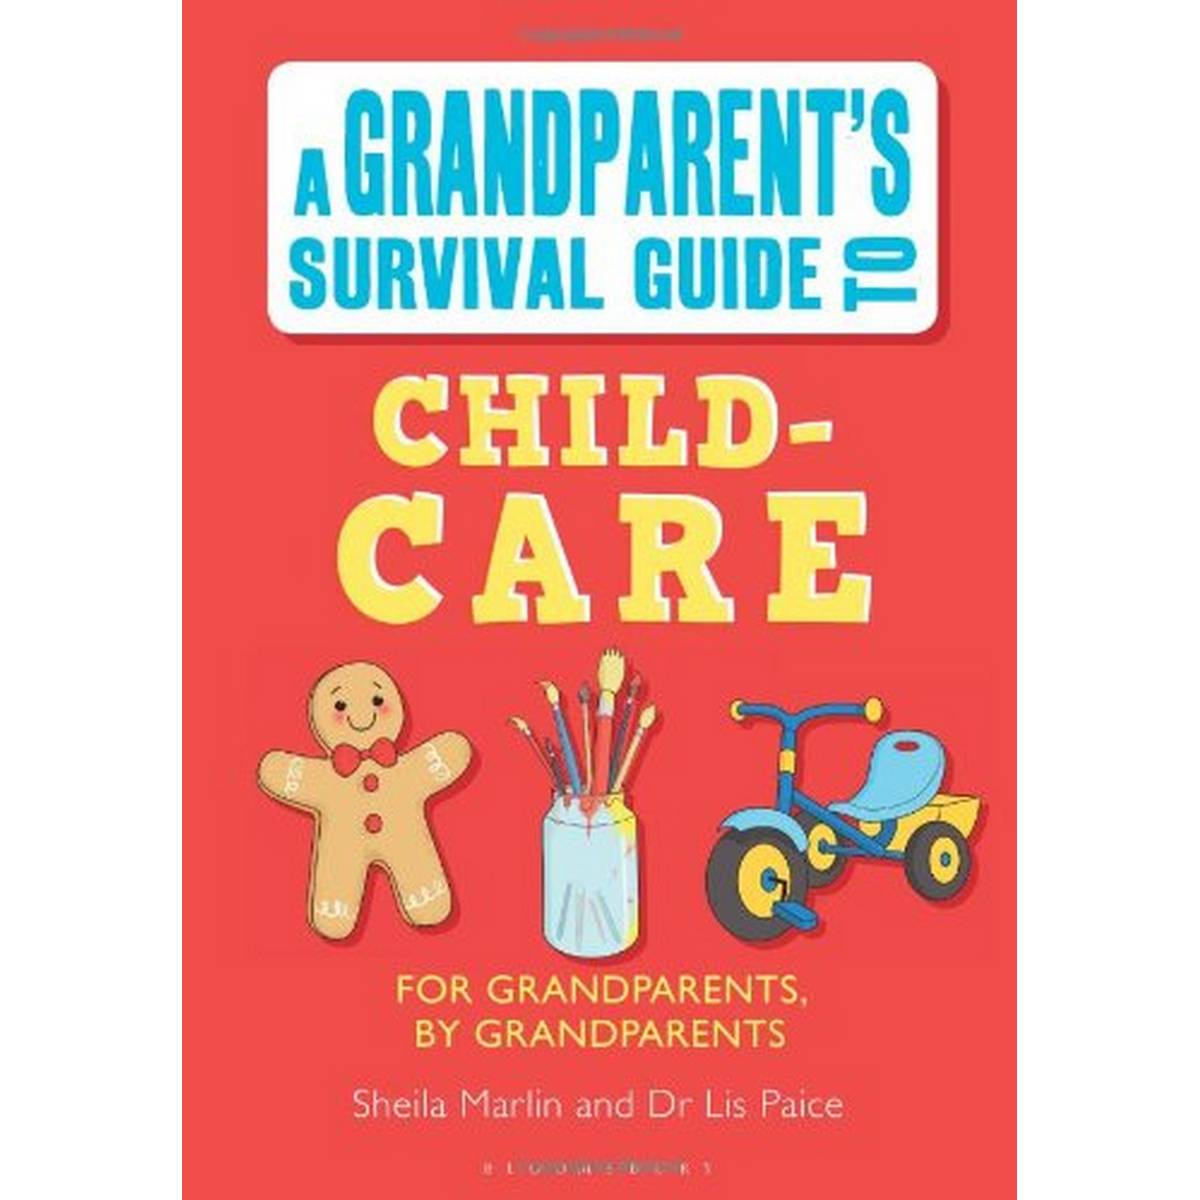 A Grandparent's Survival Guide to Child Care